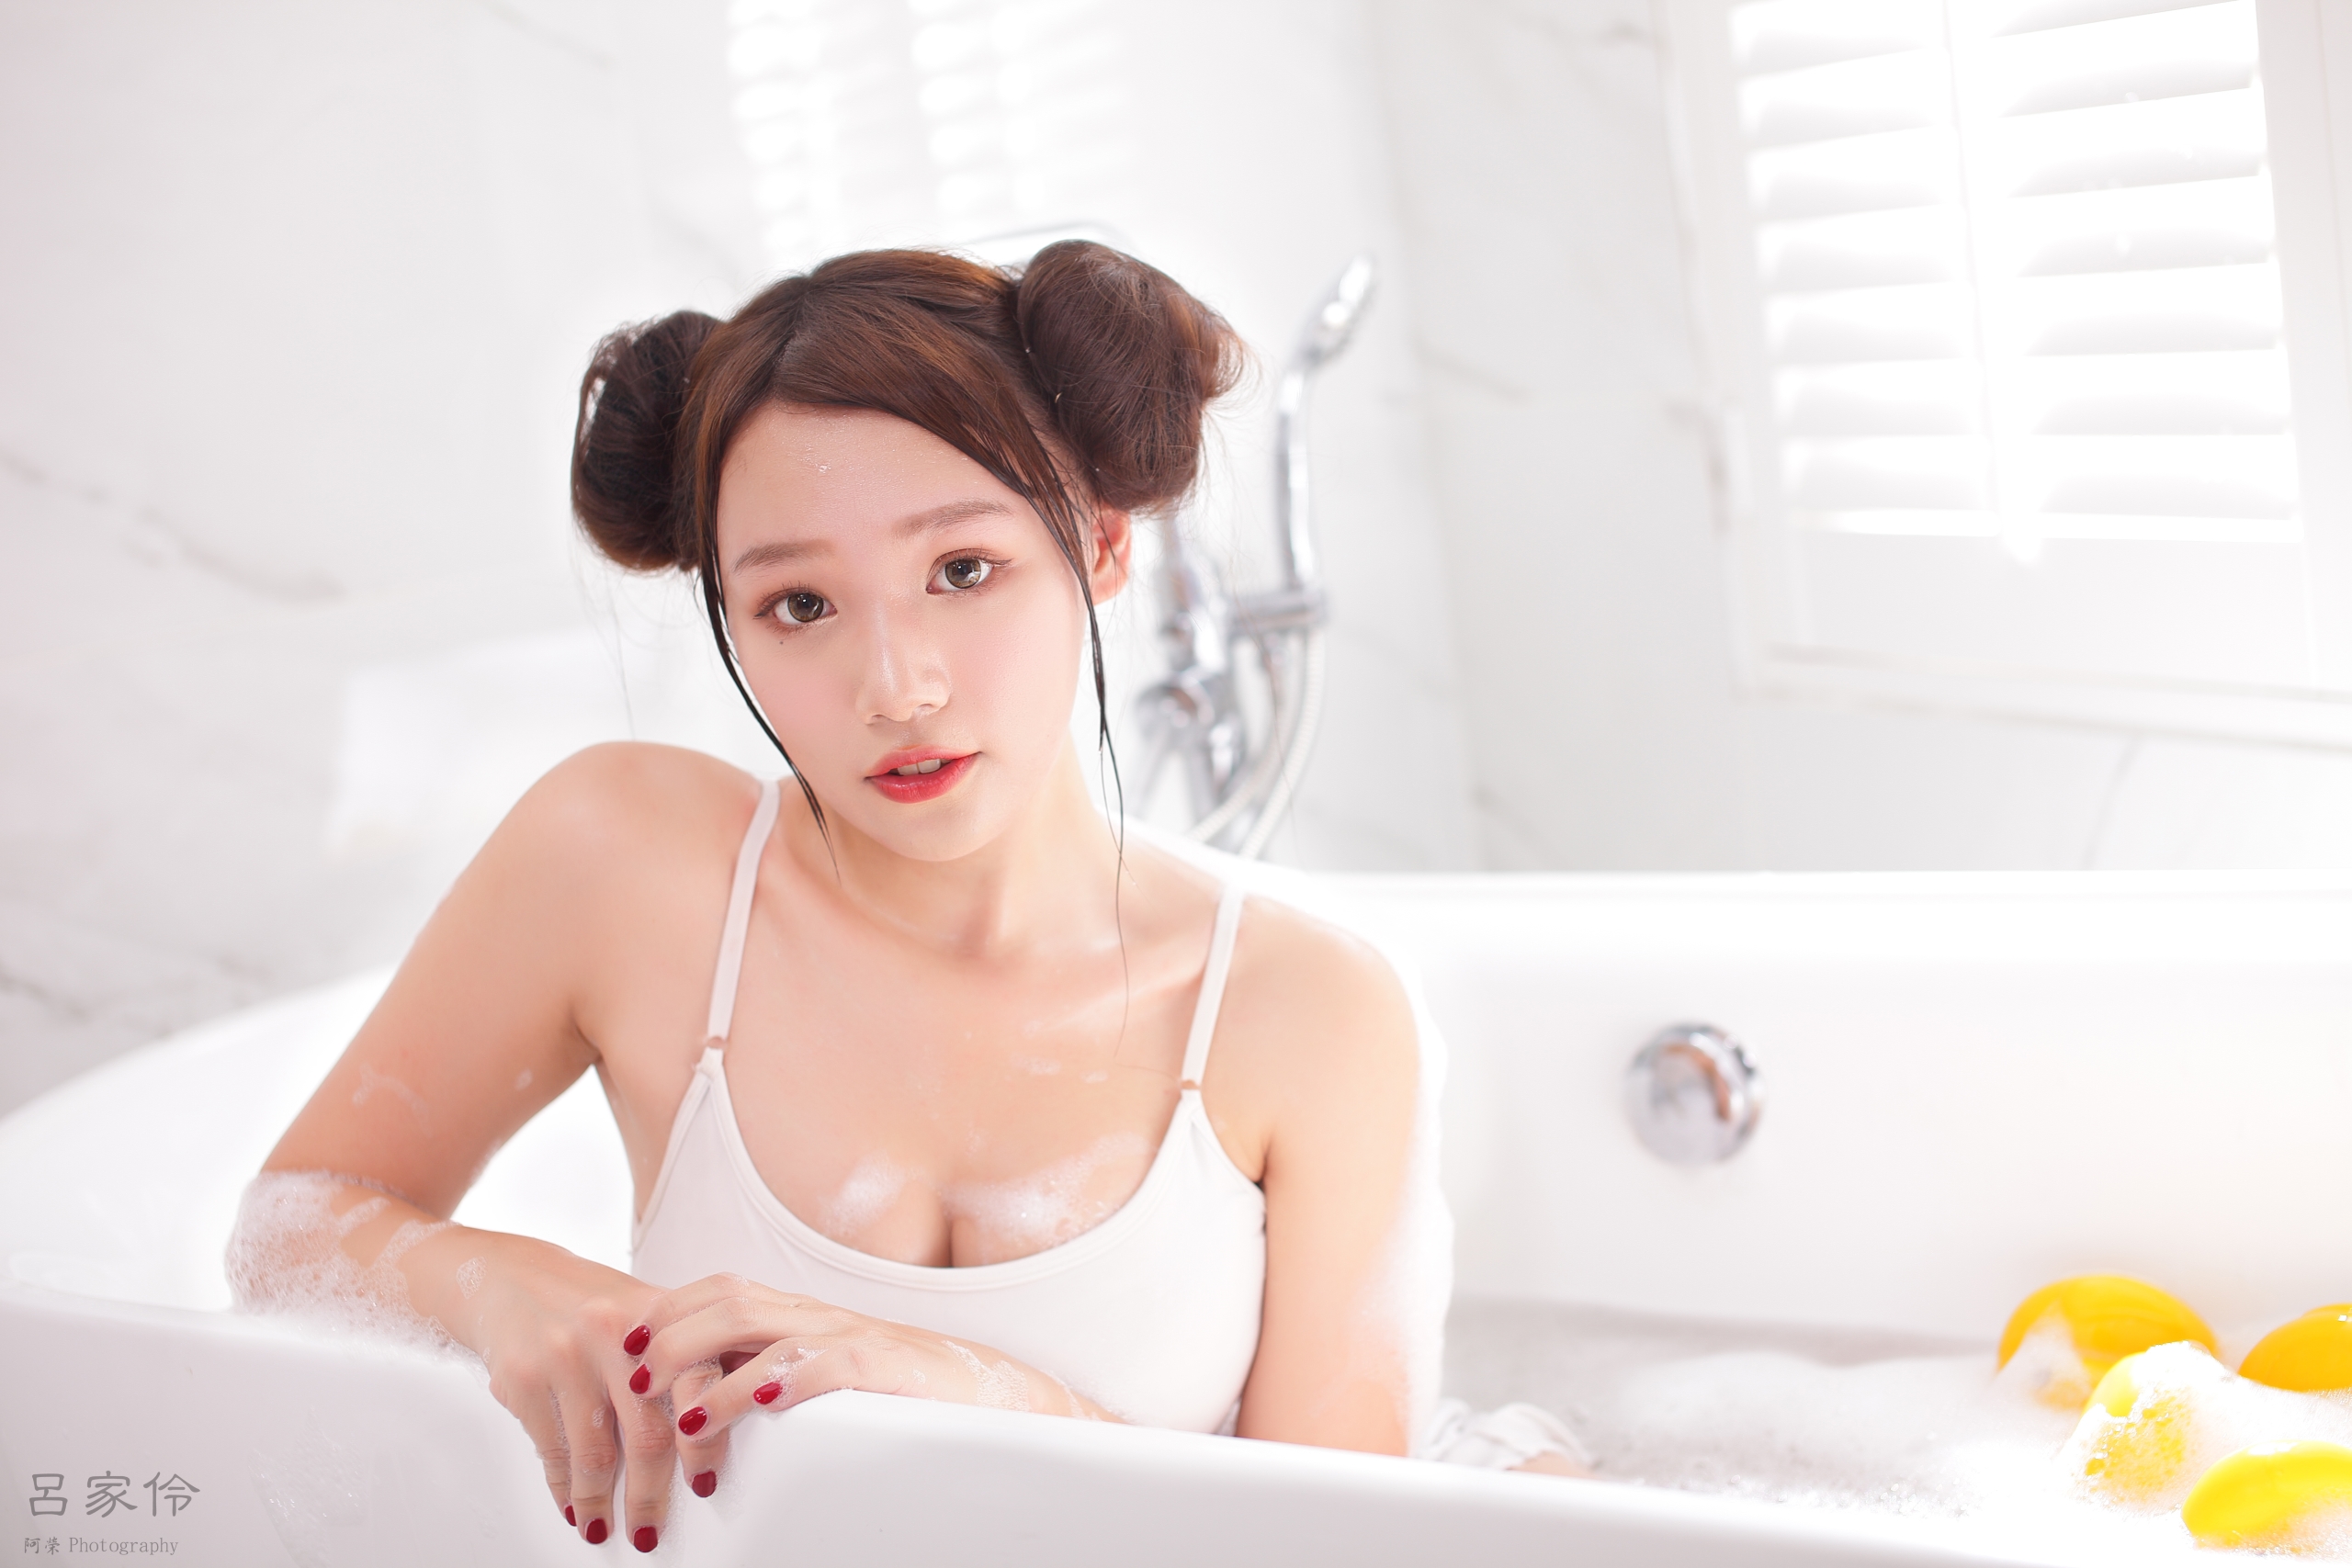 Linnnng Women Model Asian Brunette Hairbun Looking At Viewer Parted Lips White Tops Tank Top Foam Ba 2560x1707